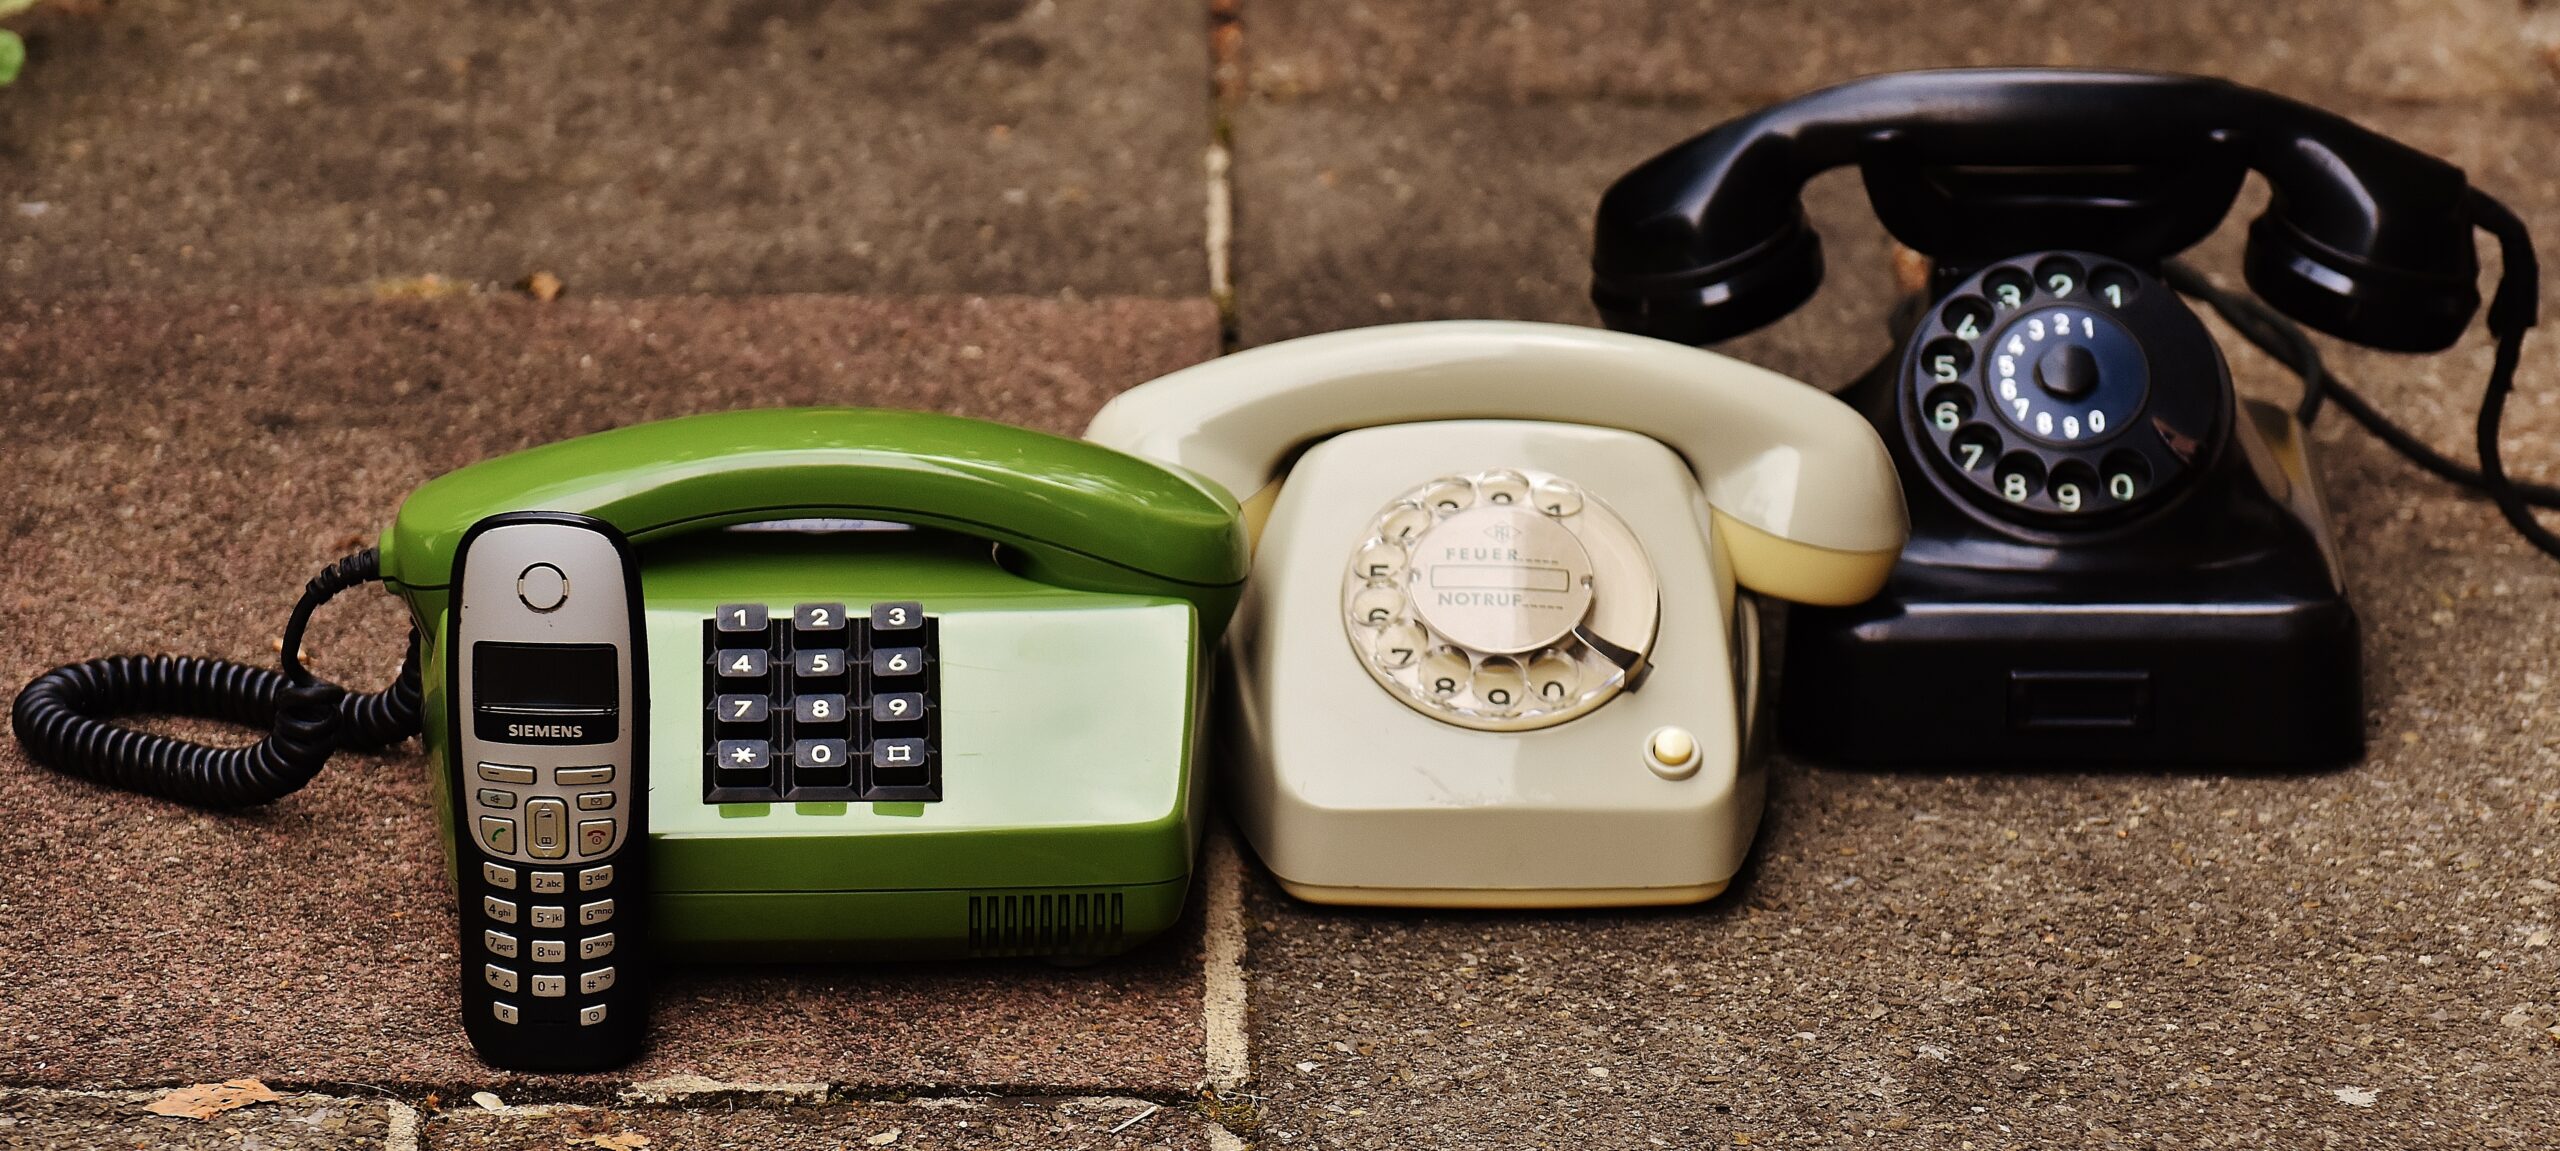 different types of telephones